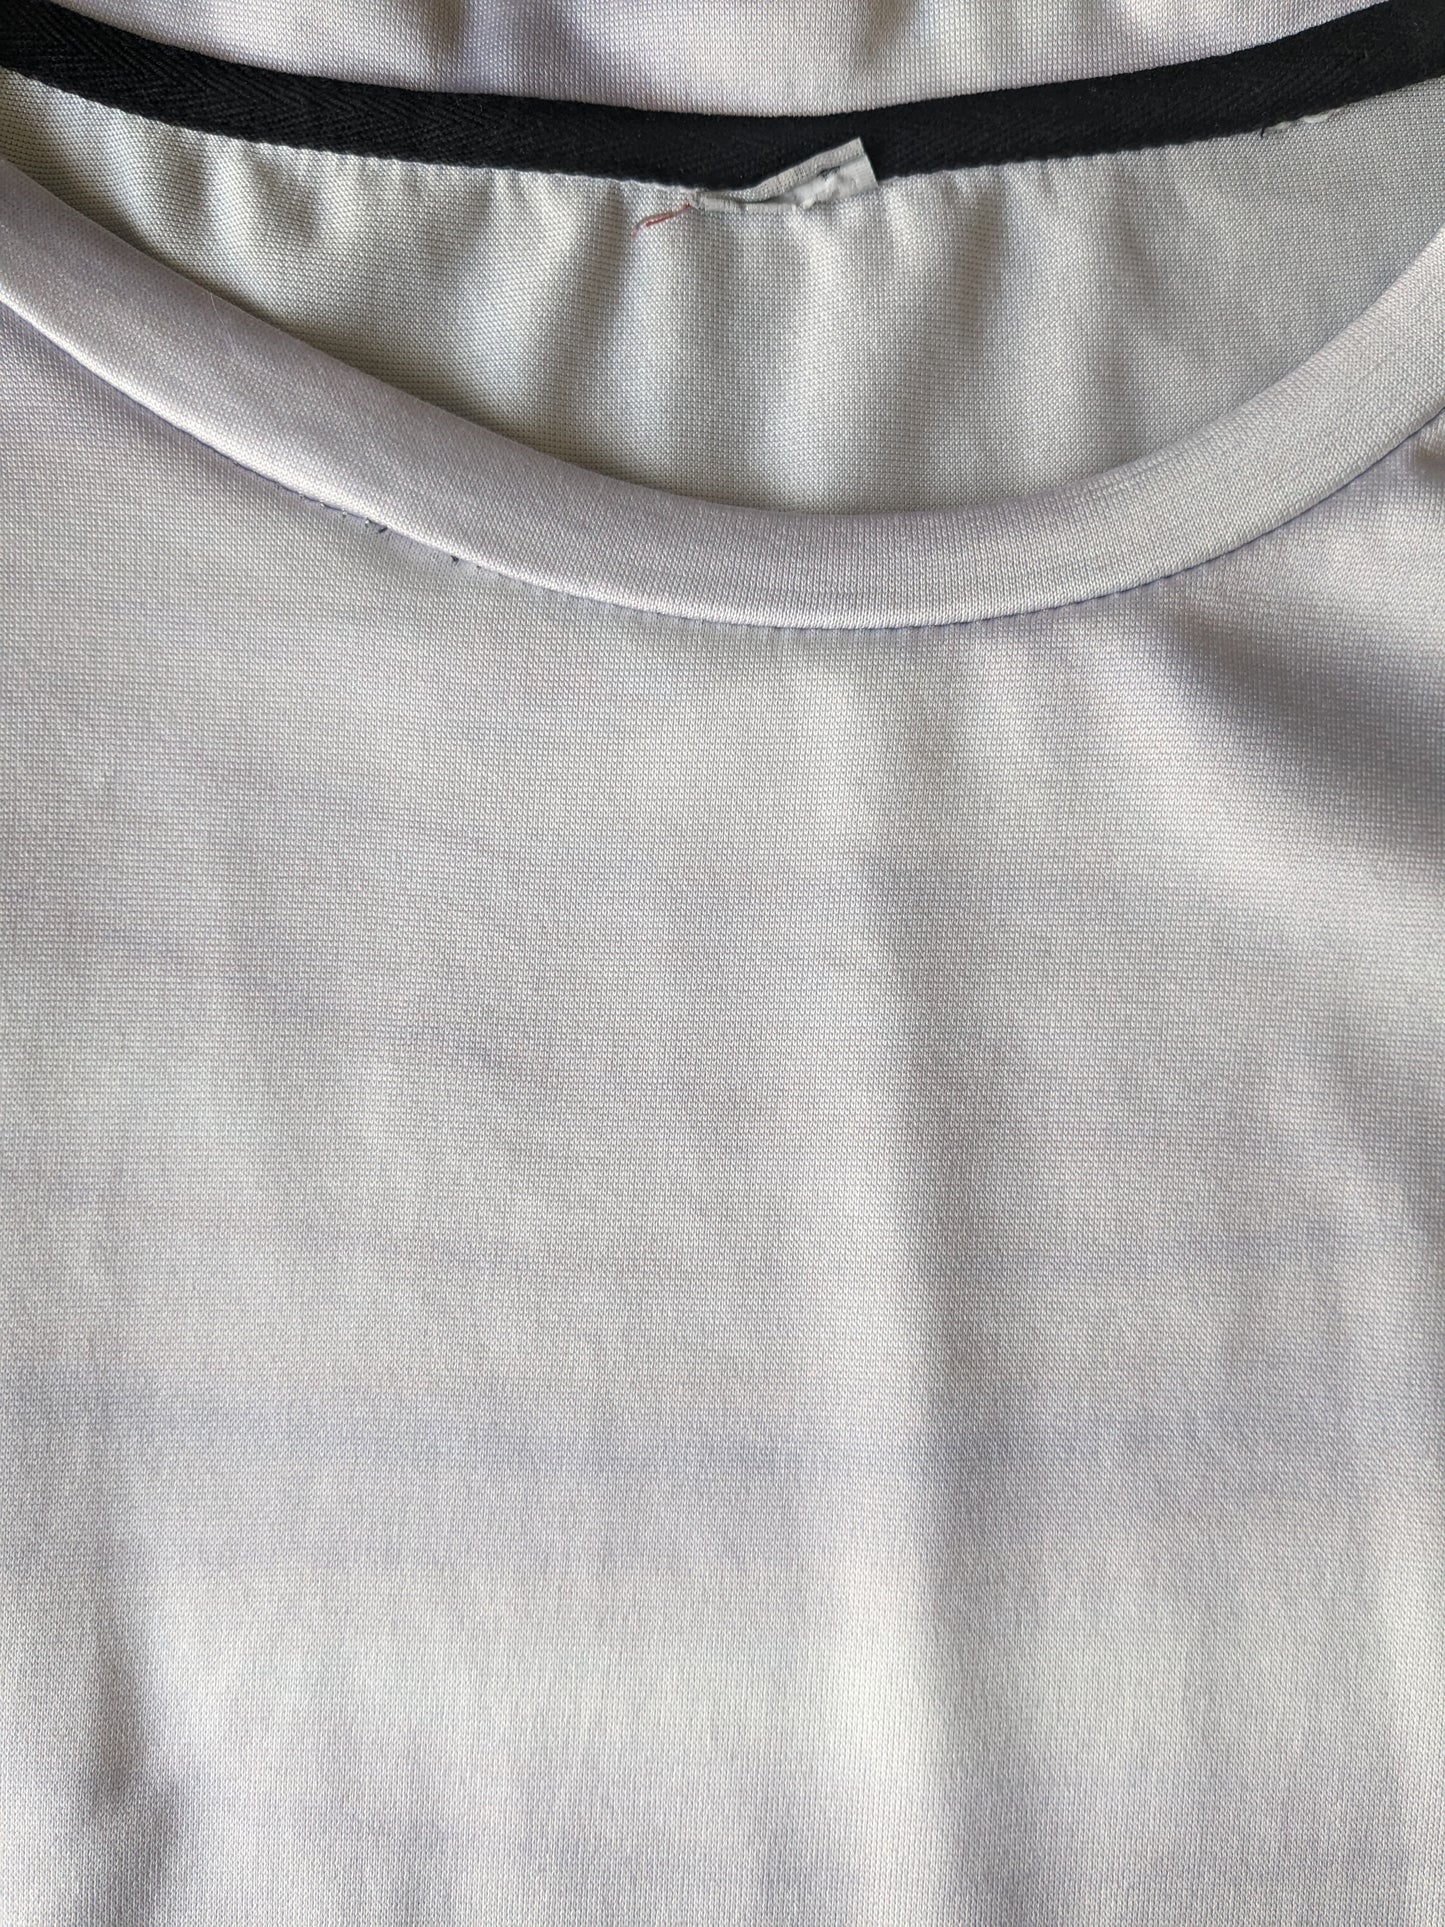 Dragonball Z print shirt. Paars Wit gekleurd. Maat M.